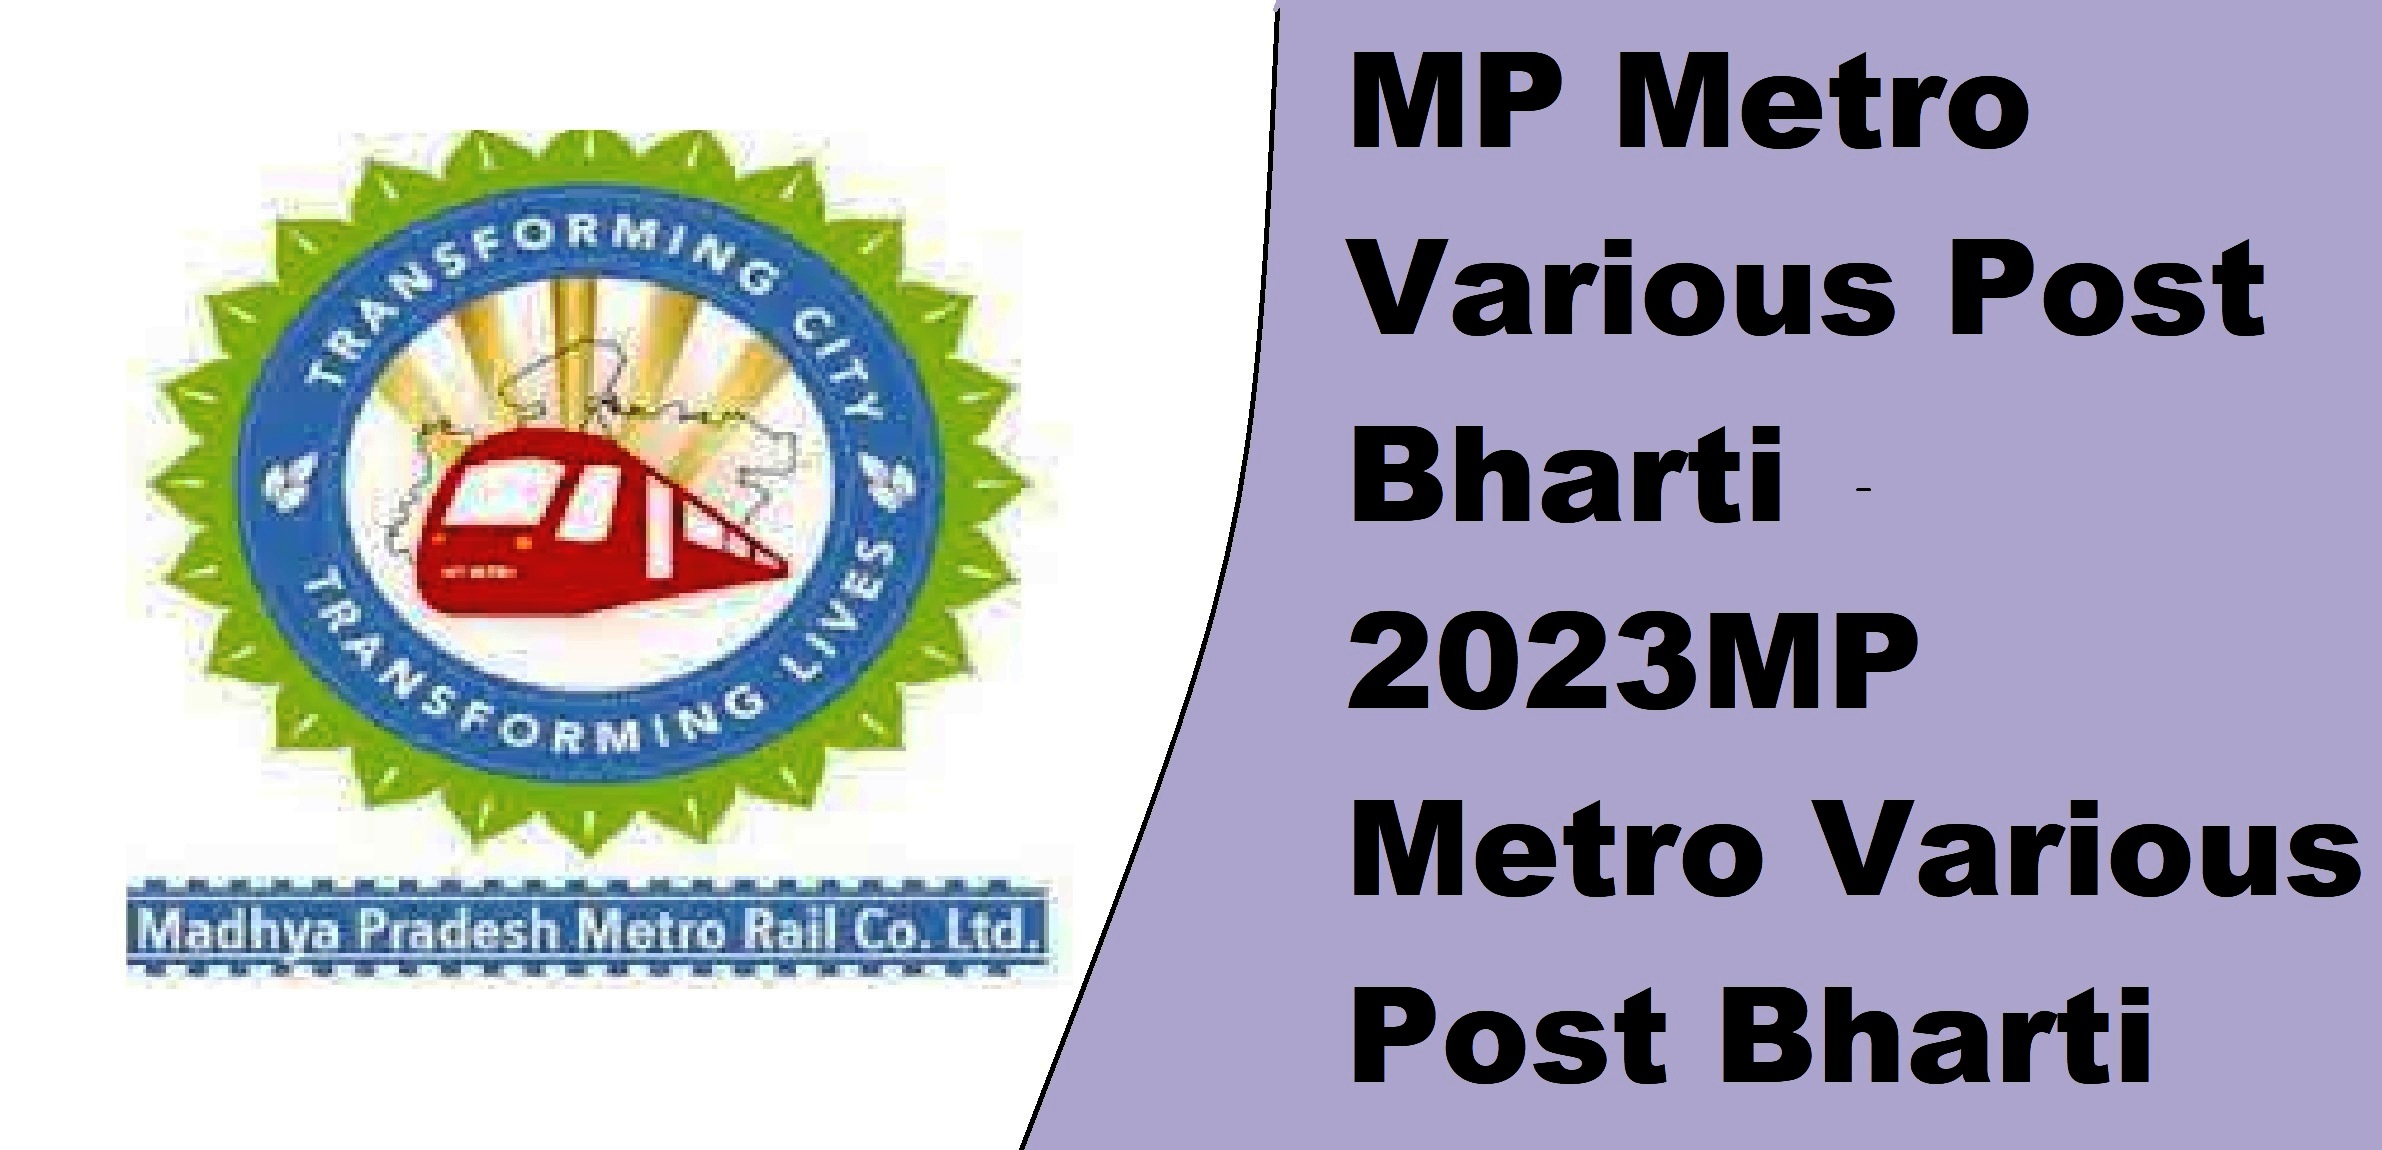 MP Metro Various Post Bharti 2023 